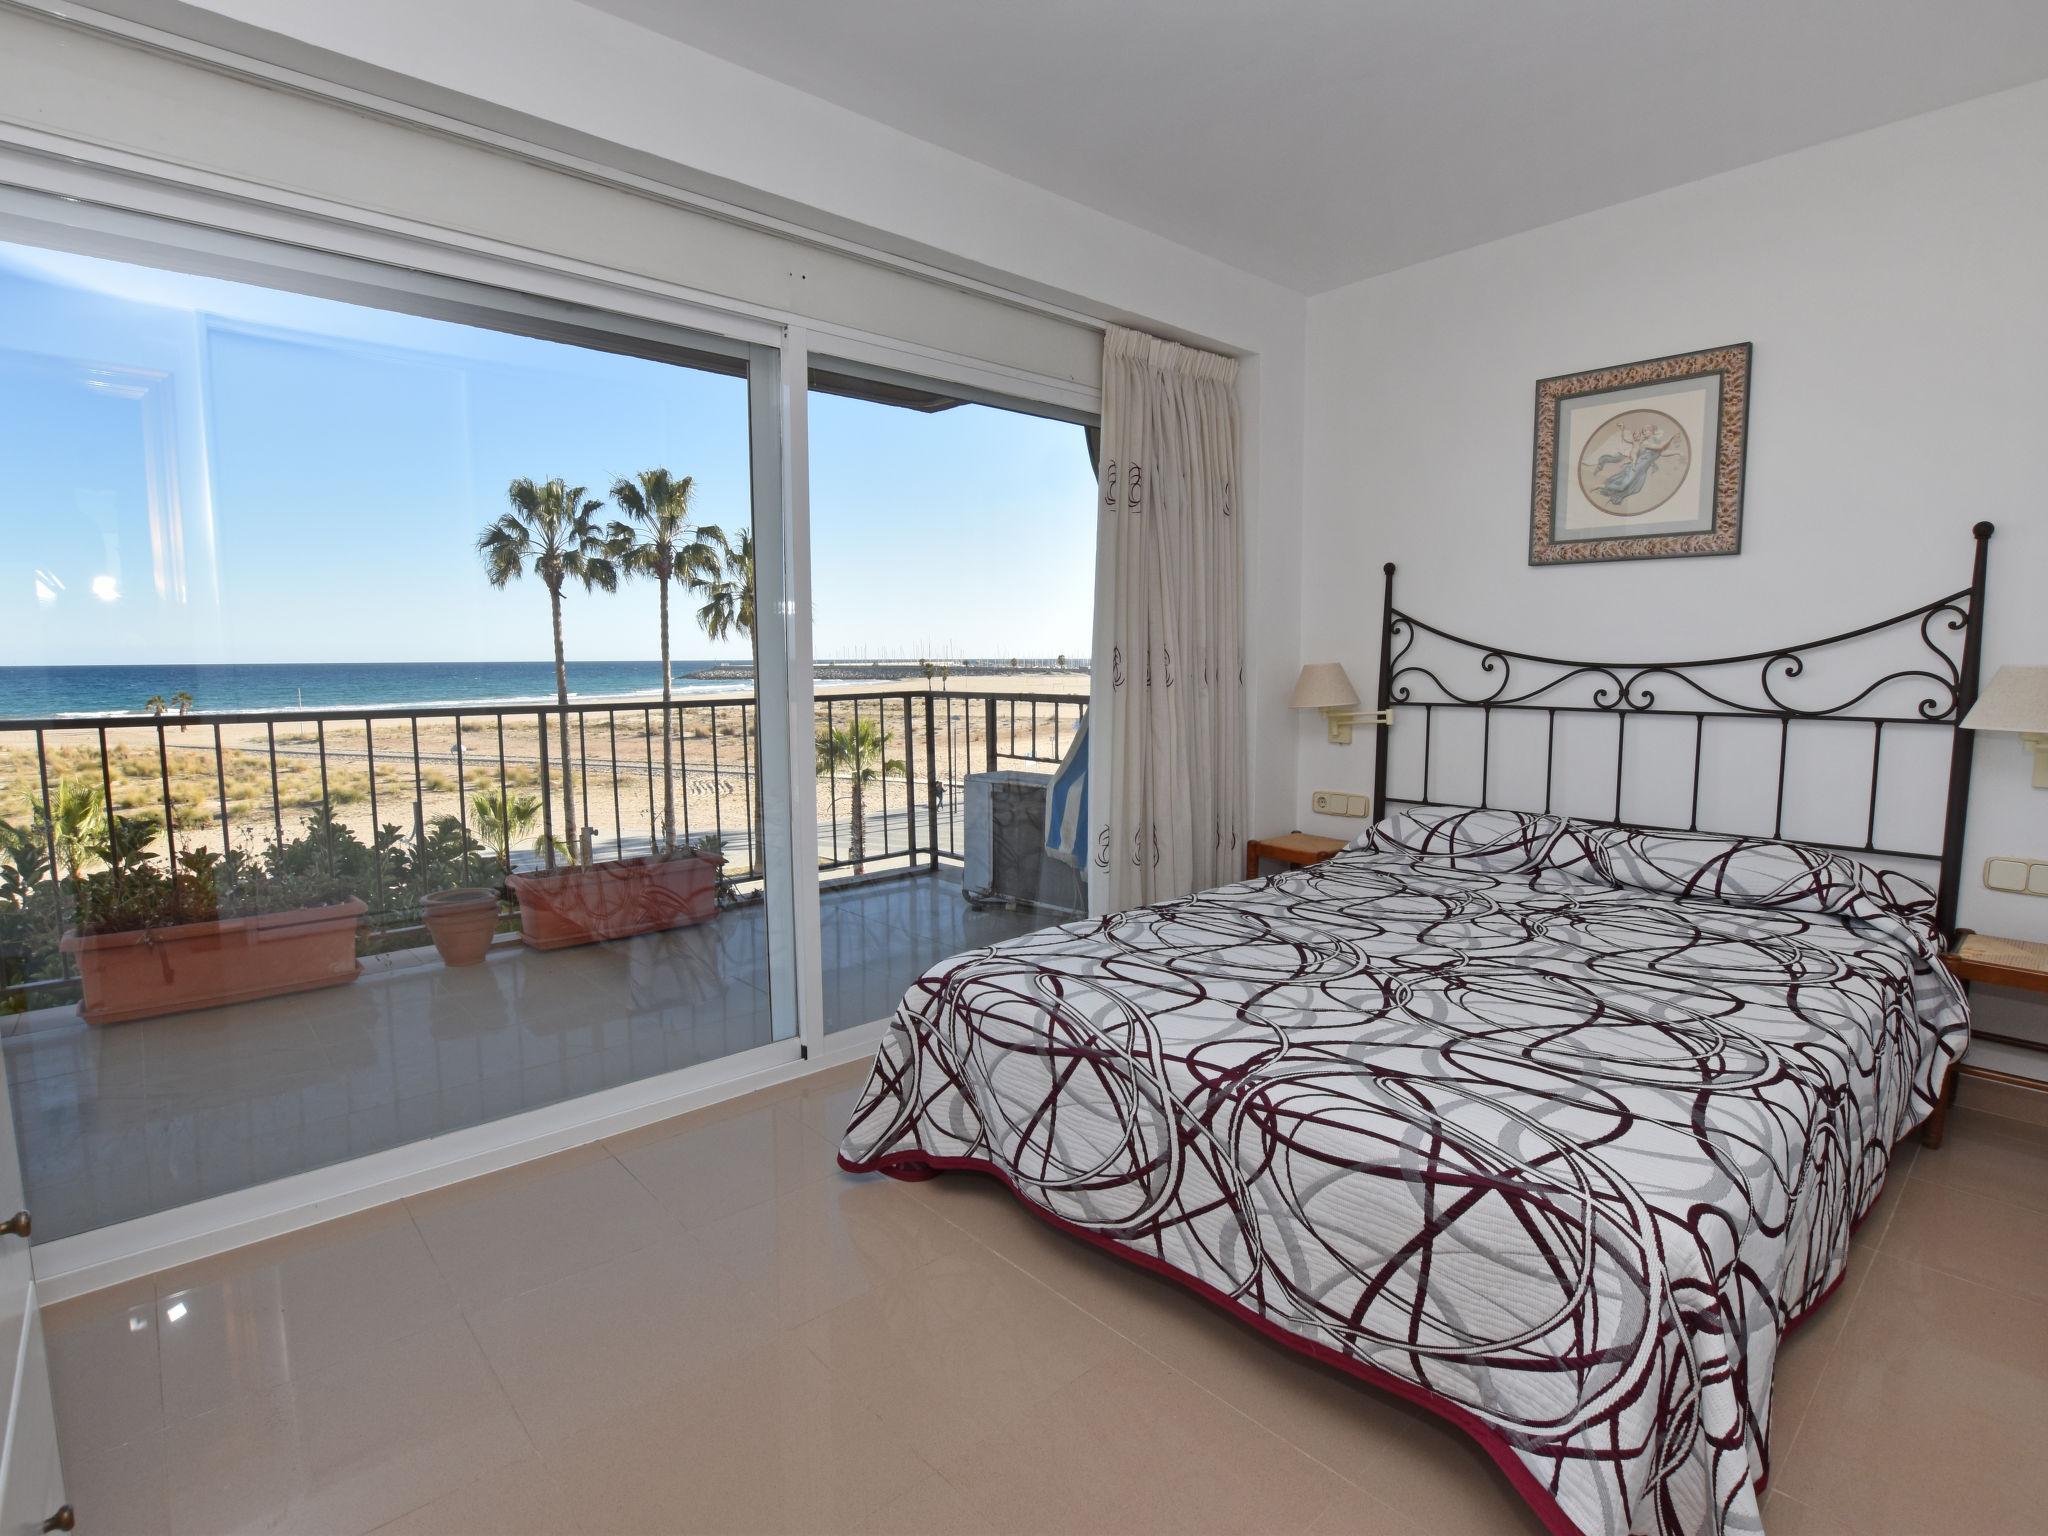 Photo 4 - Appartement de 4 chambres à Torredembarra avec terrasse et vues à la mer